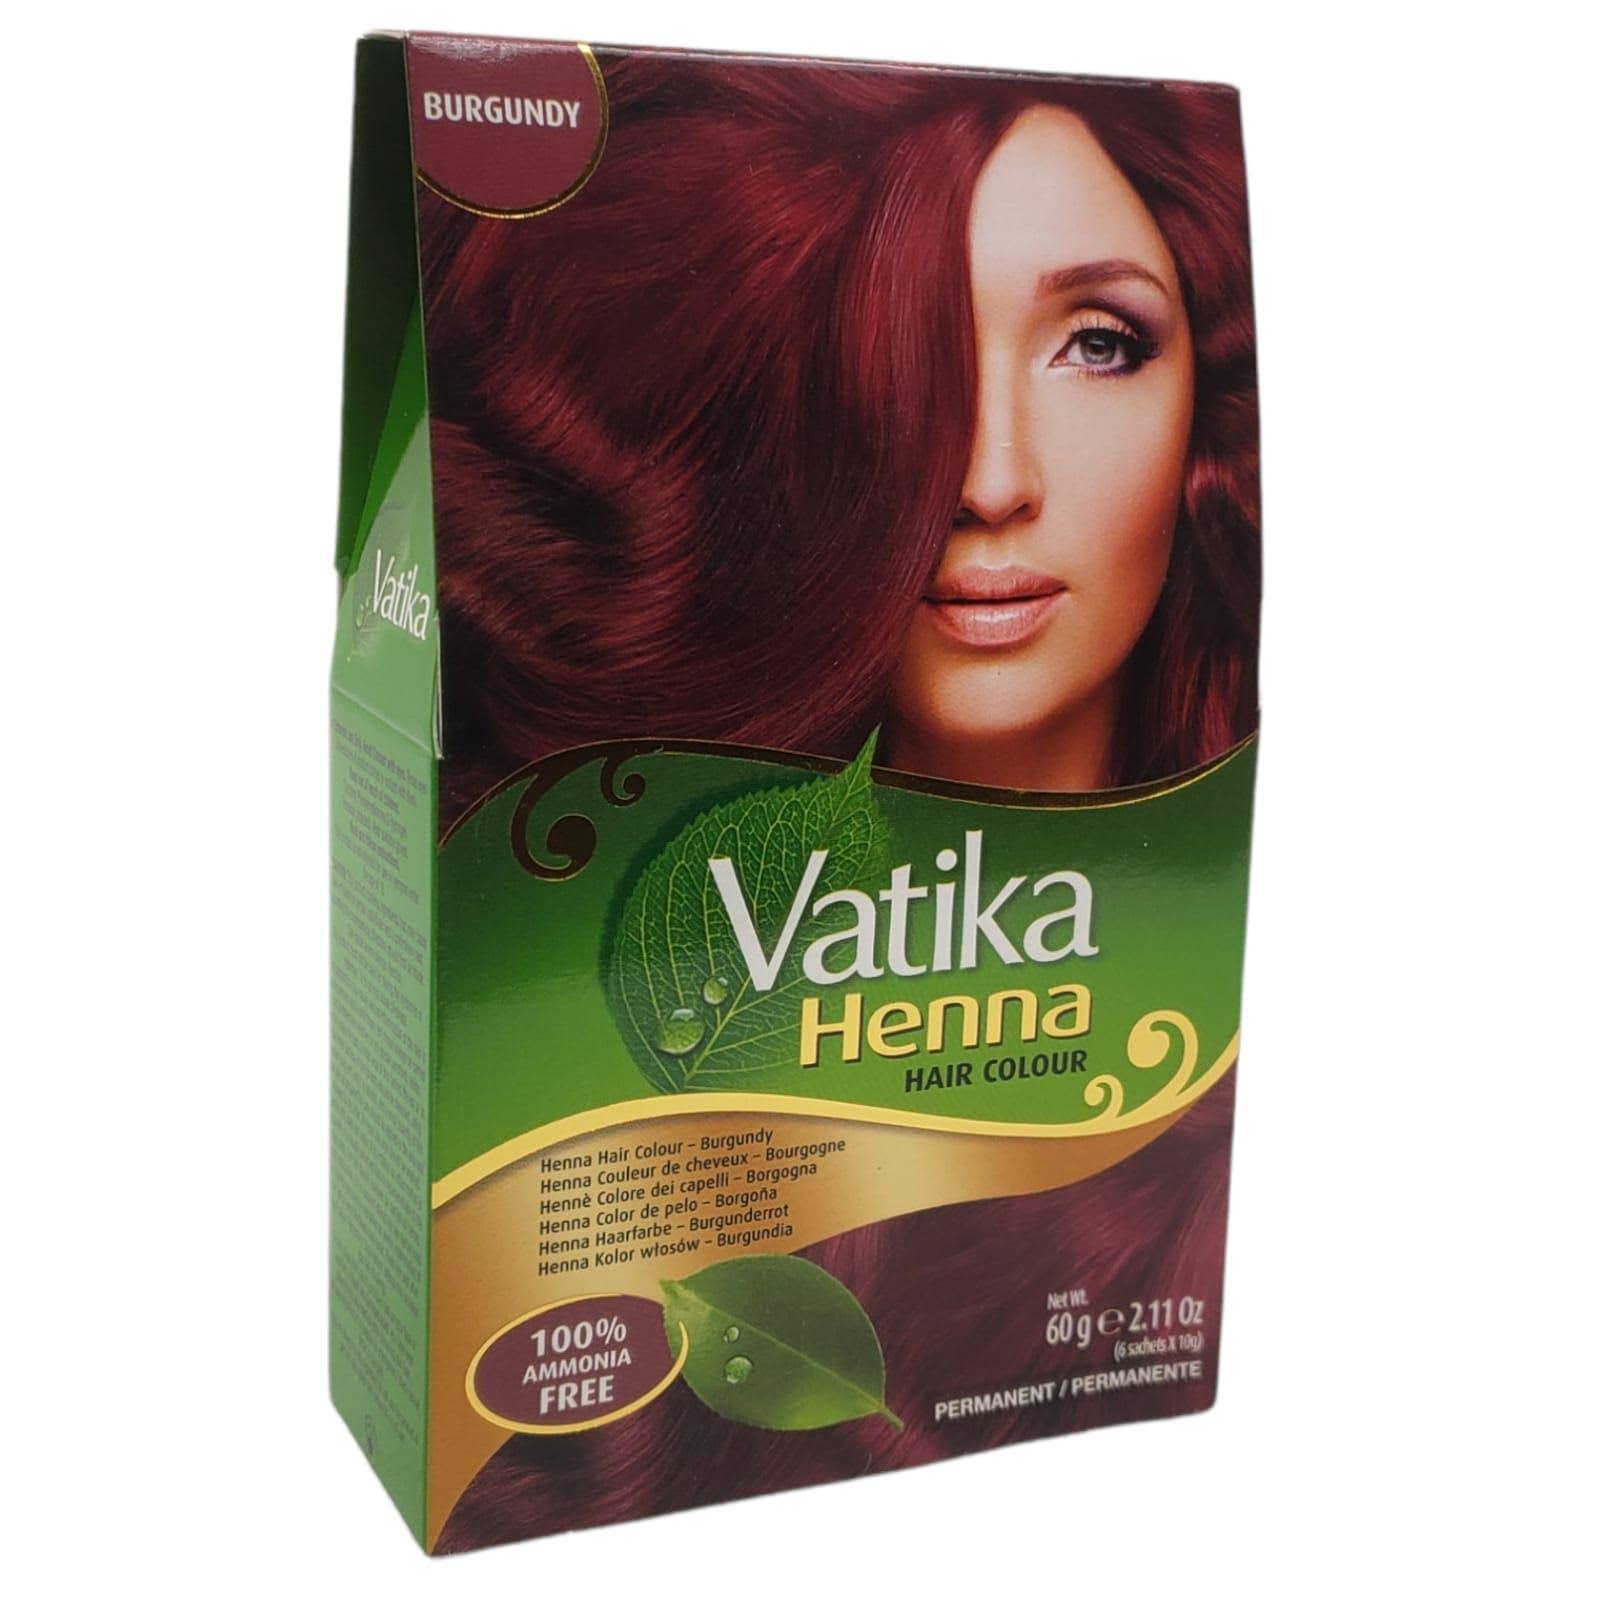 Vatika Henna Hair Colour - Burgundy, 60g